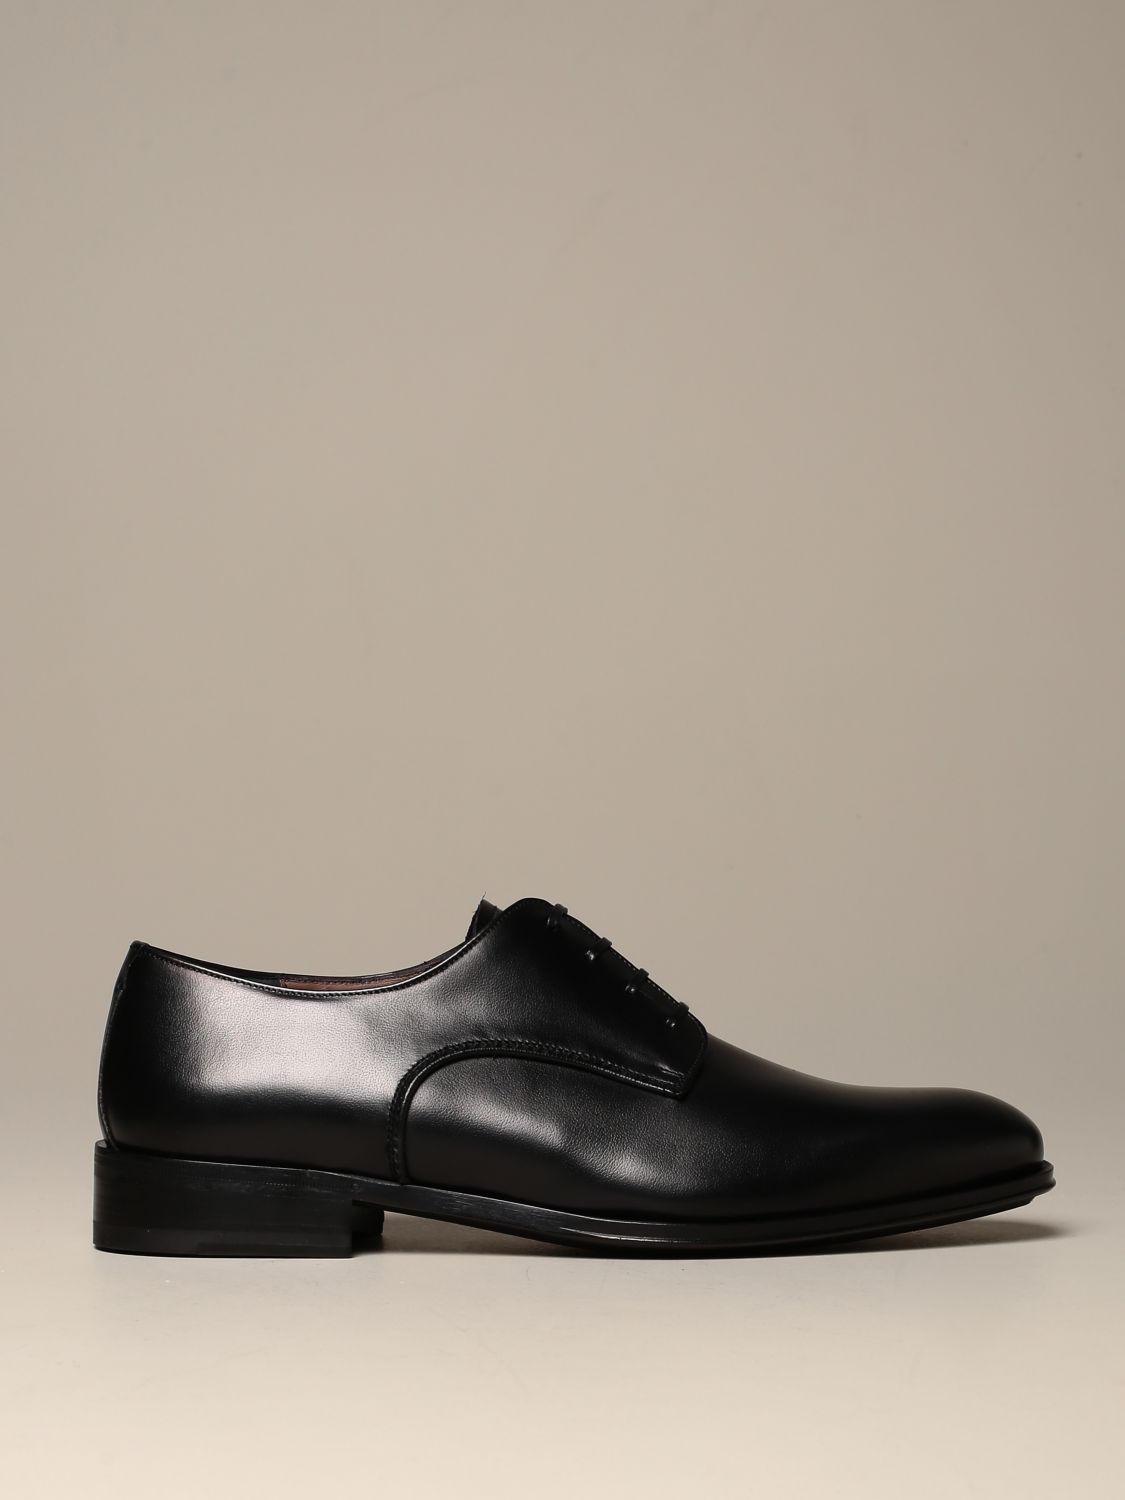 Ferragamo Outlet: brogue shoes for men - Black | Ferragamo brogue shoes ...